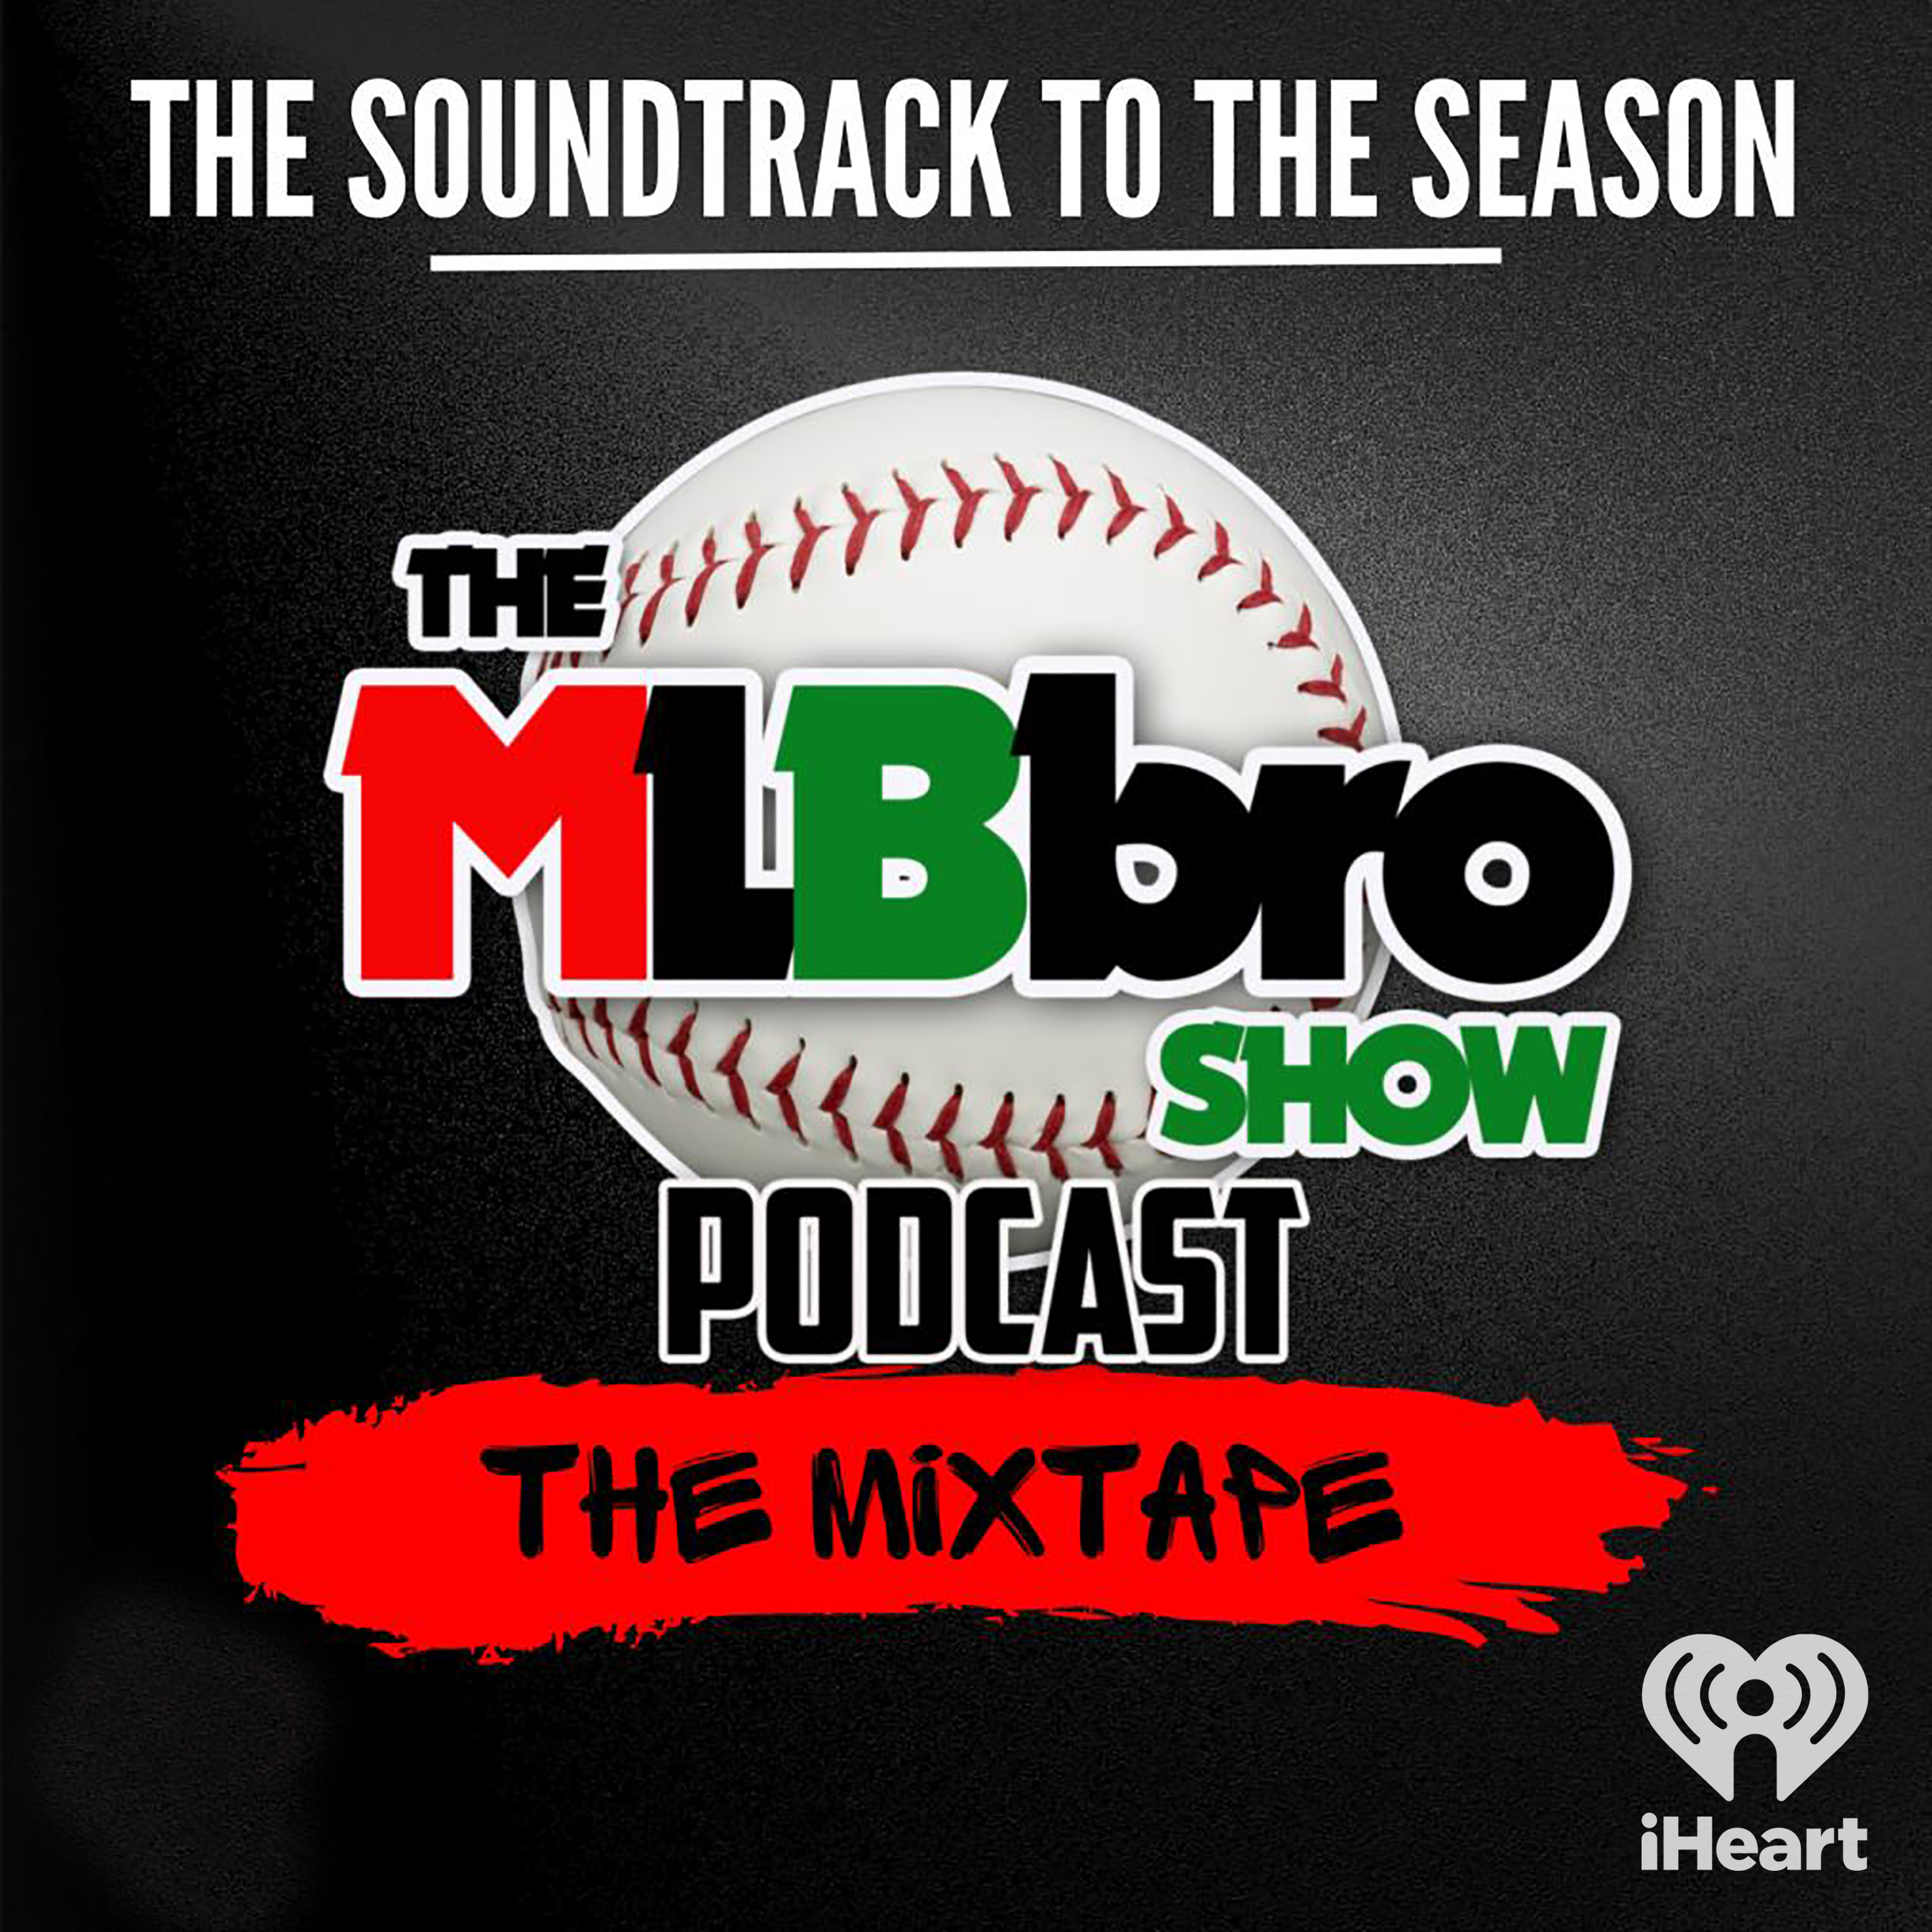 MLBbro Show Podcast The Mixtape Vol 3 Episode 25